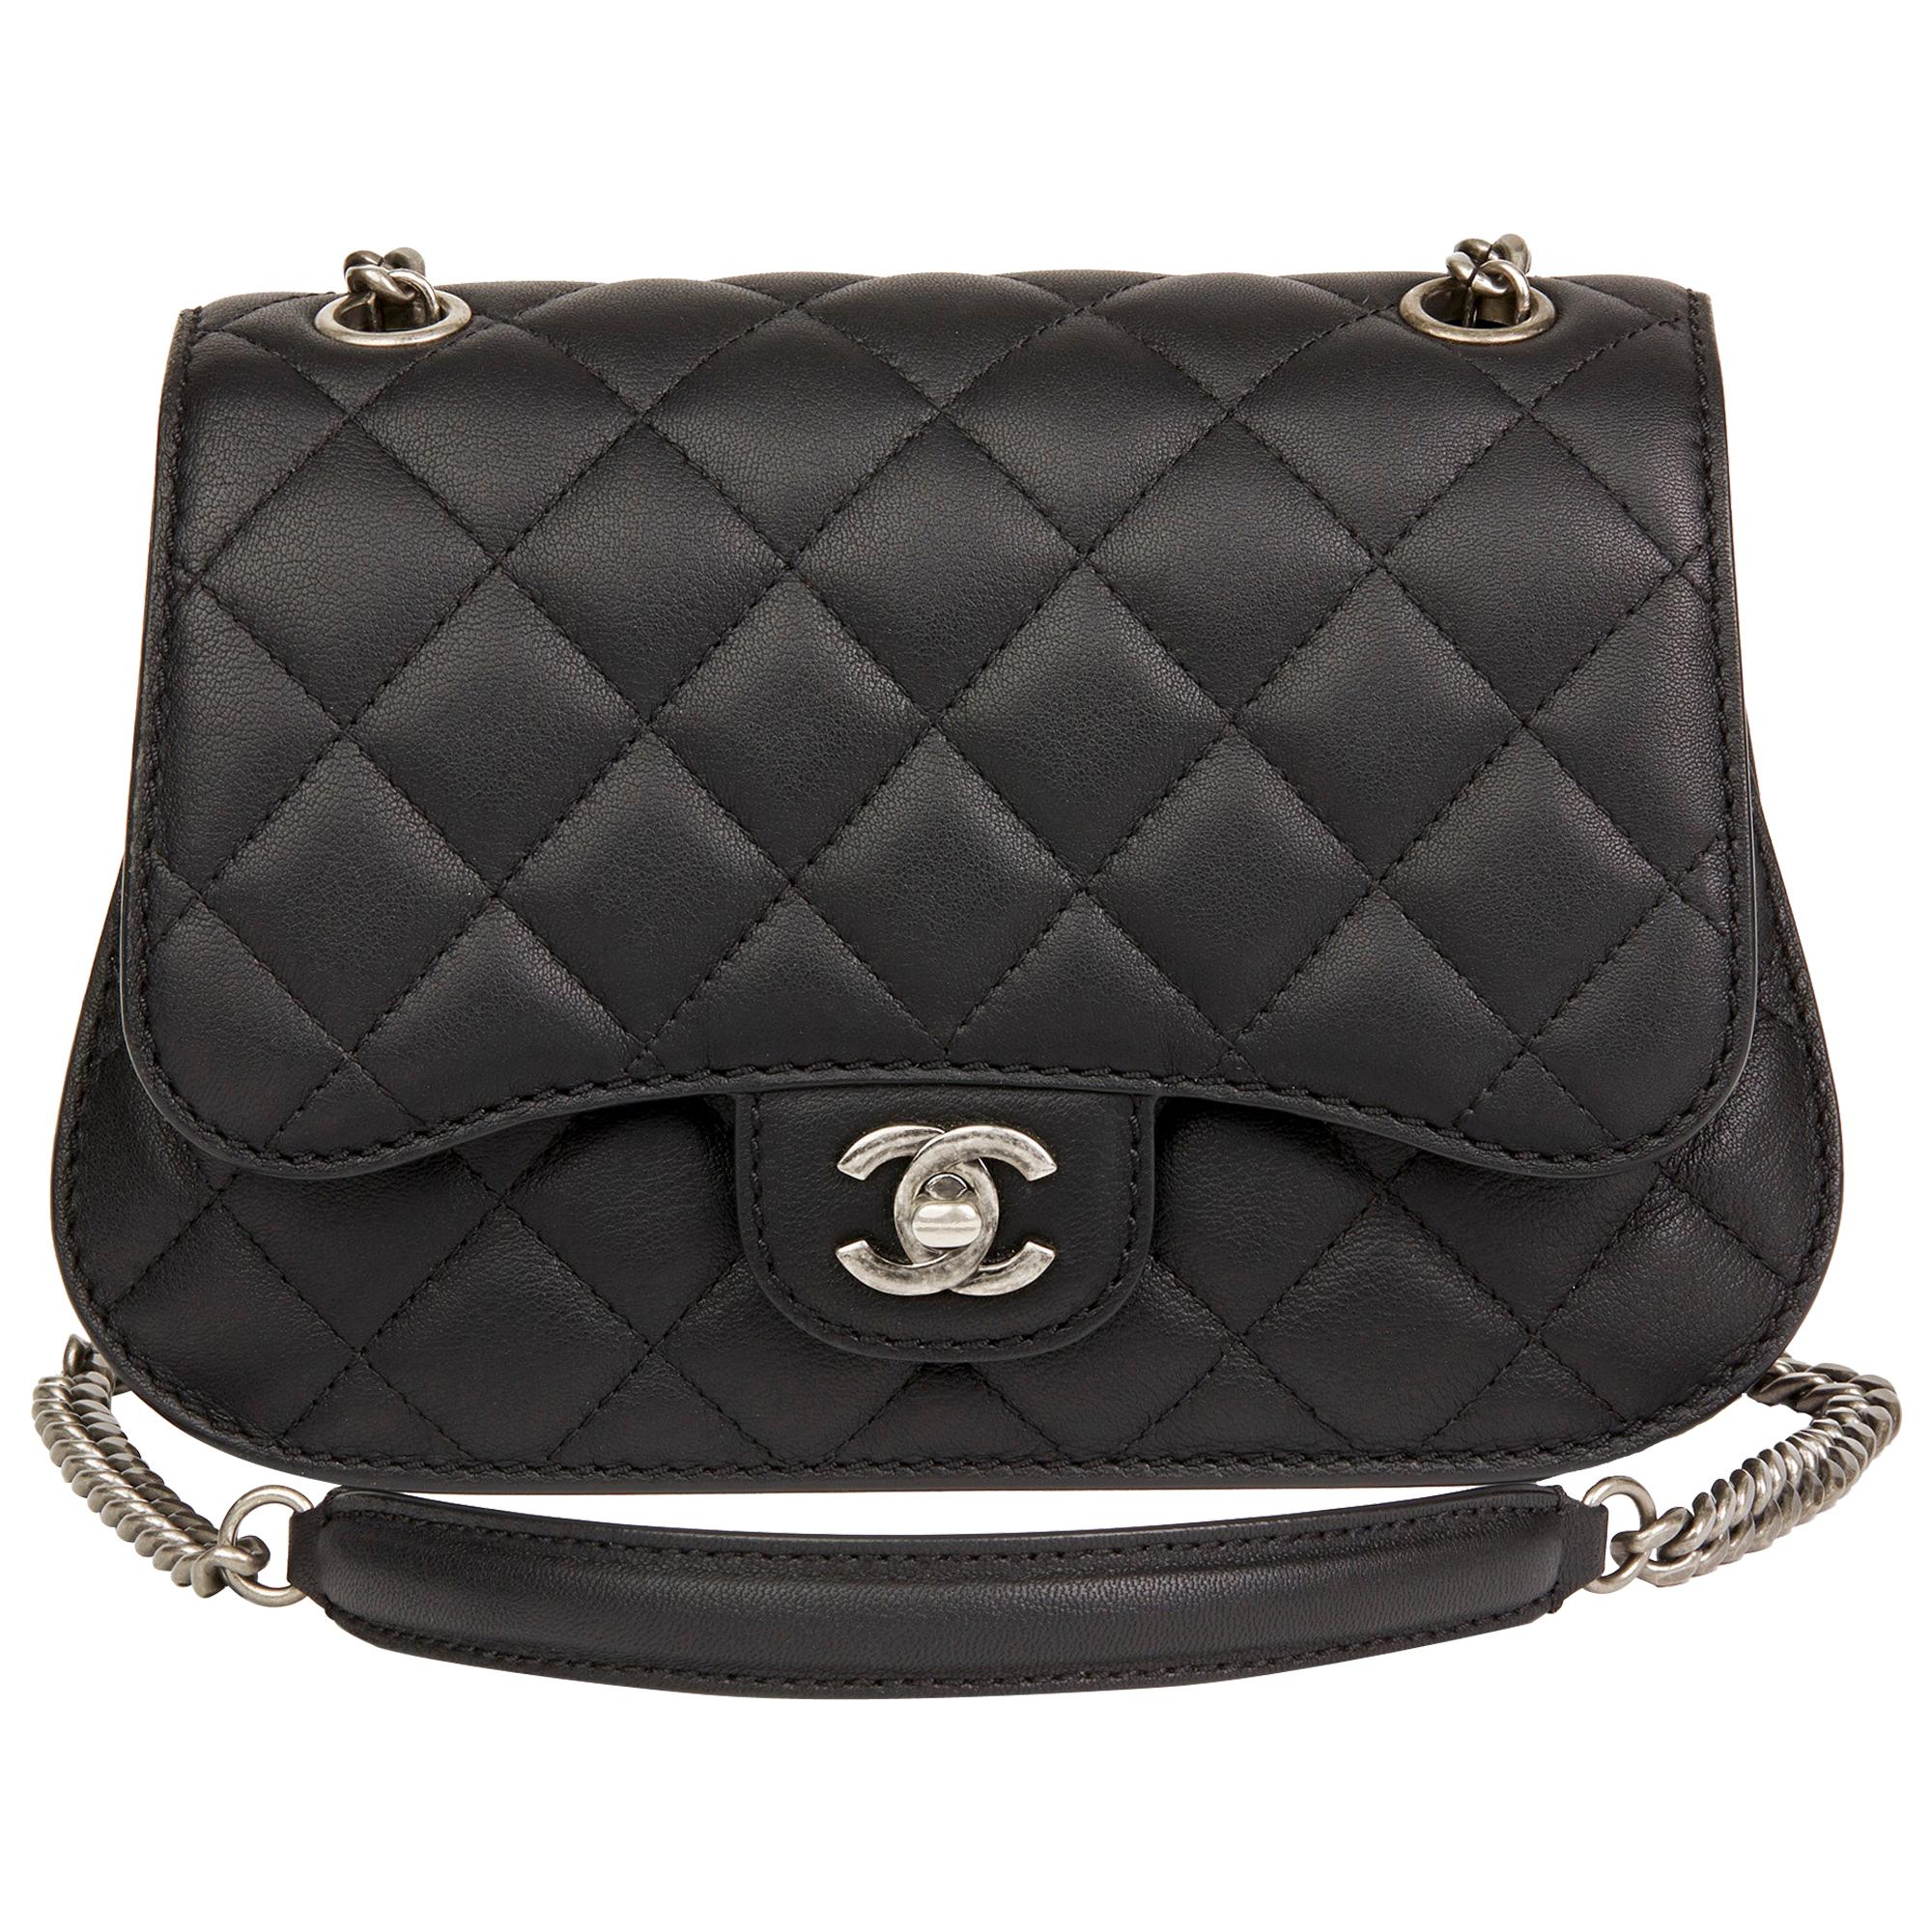 2017 Chanel Black Quilted Calfskin Leather Saddle Bag